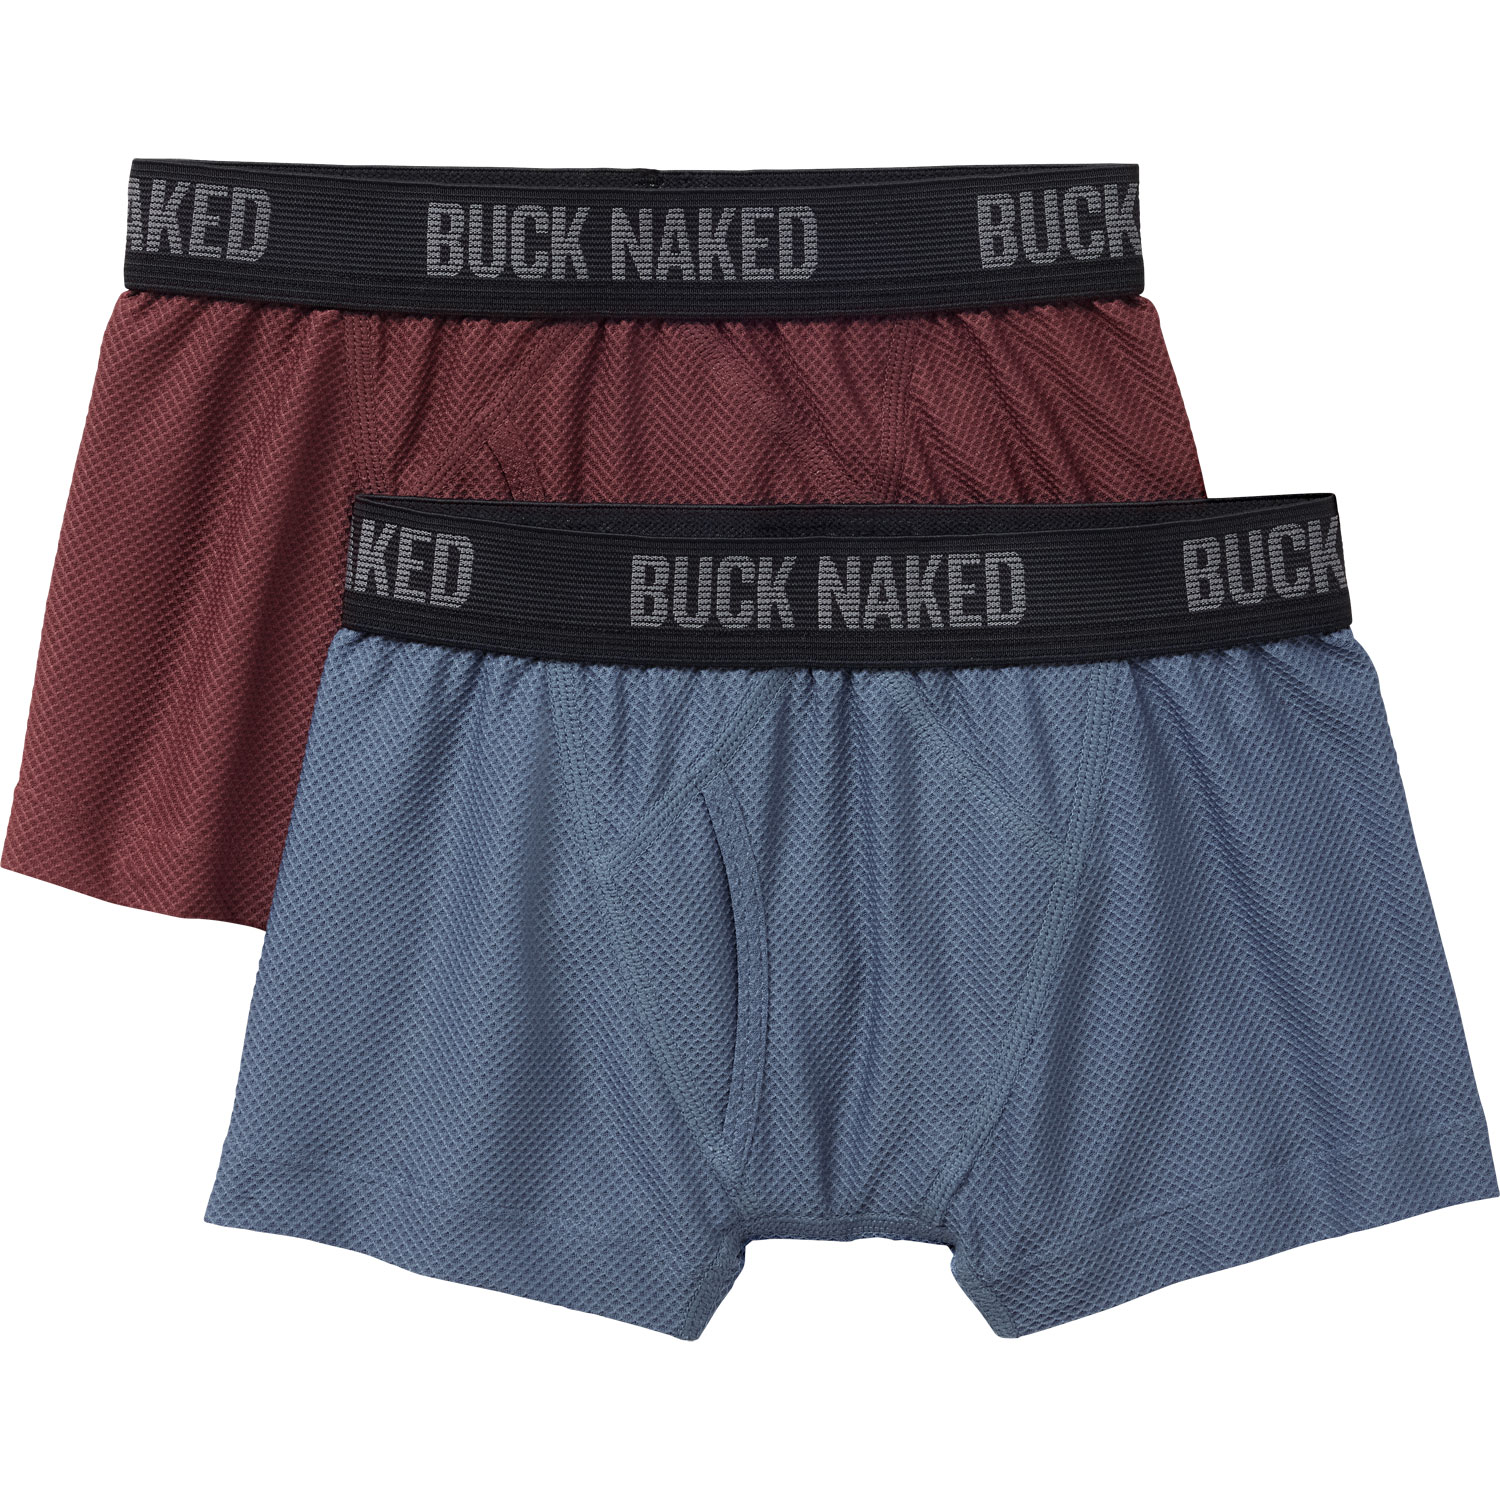 REVIEW Men's Duluth Buck Naked Underwear Boxer Briefs I LOVE THEM 